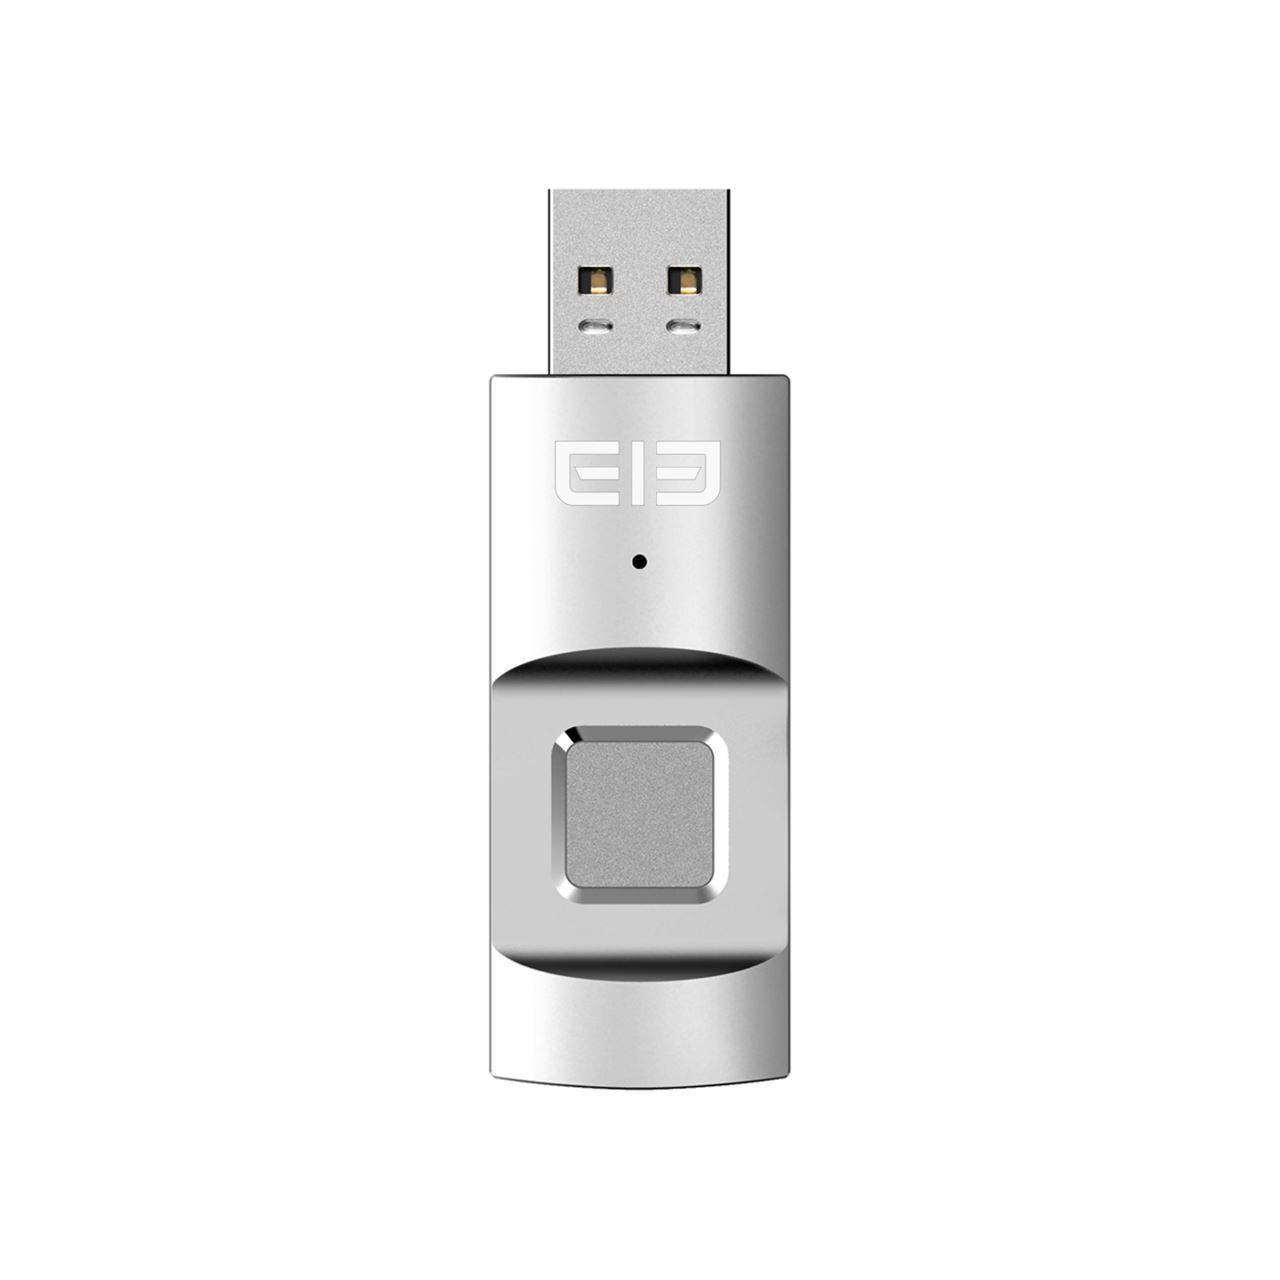 ELE Secret USB stick with fingerprint sensor with 20 discount